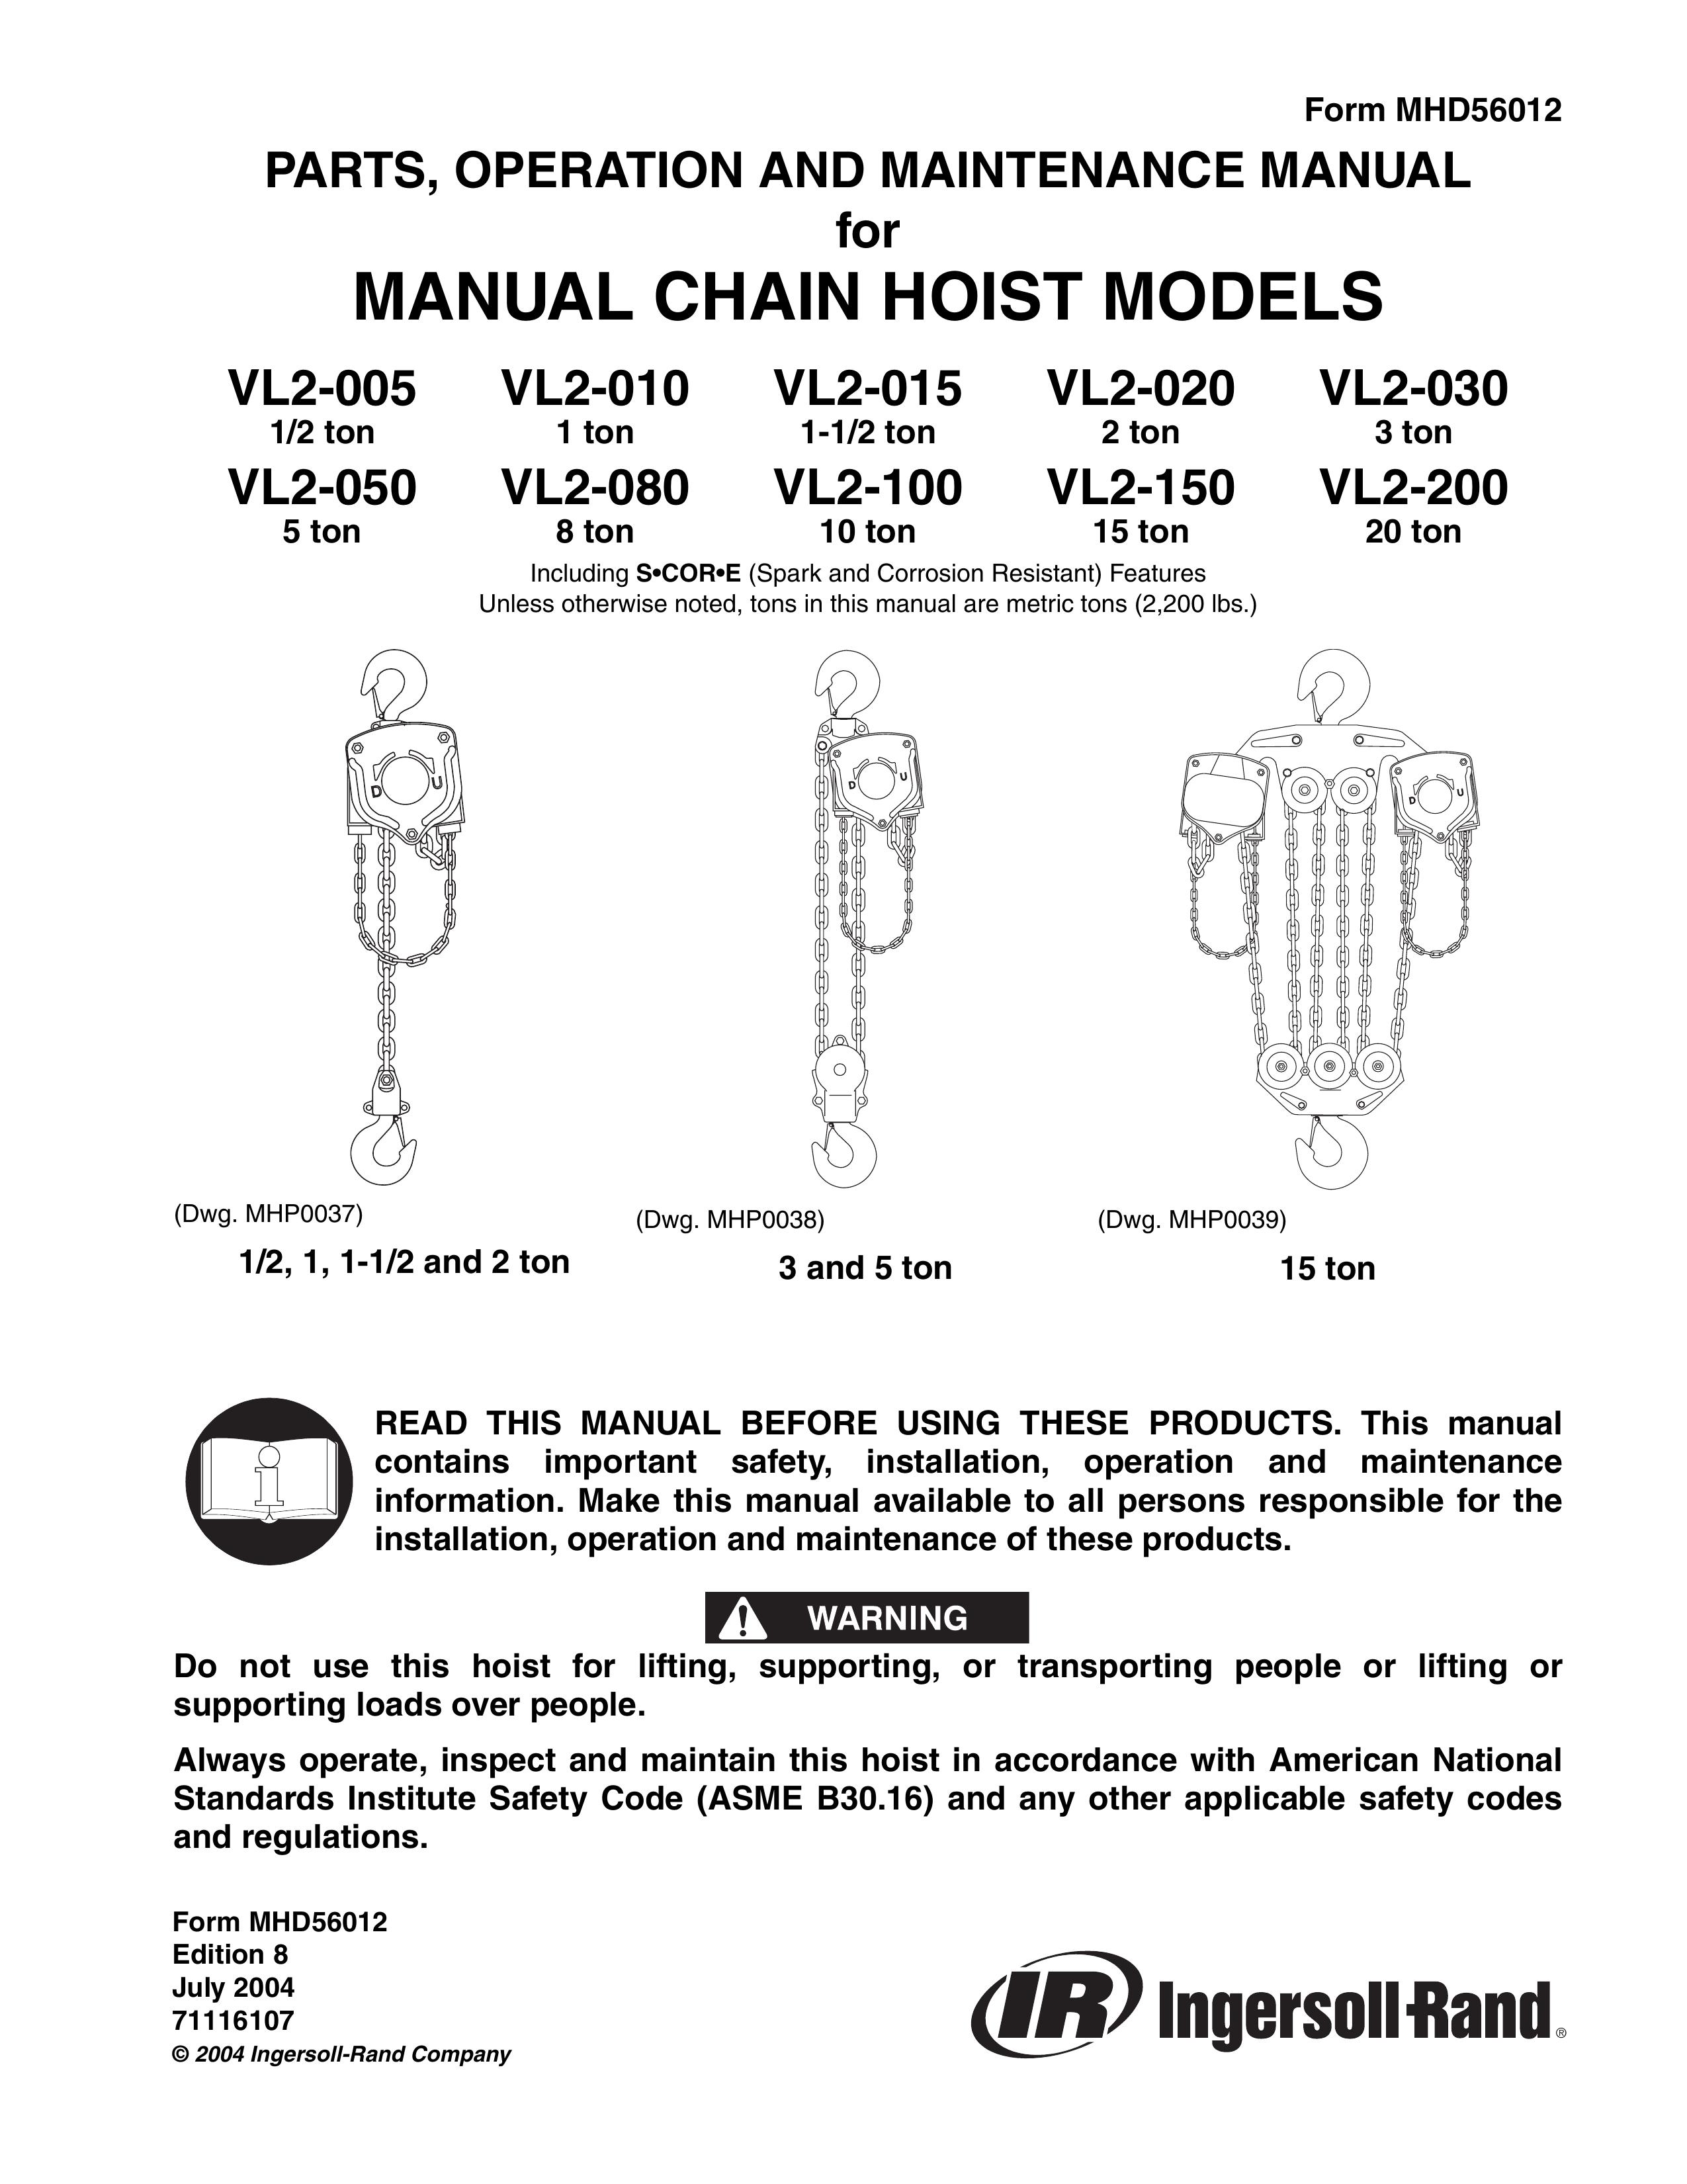 Ingersoll-Rand VL2-100 Digital Photo Keychain User Manual